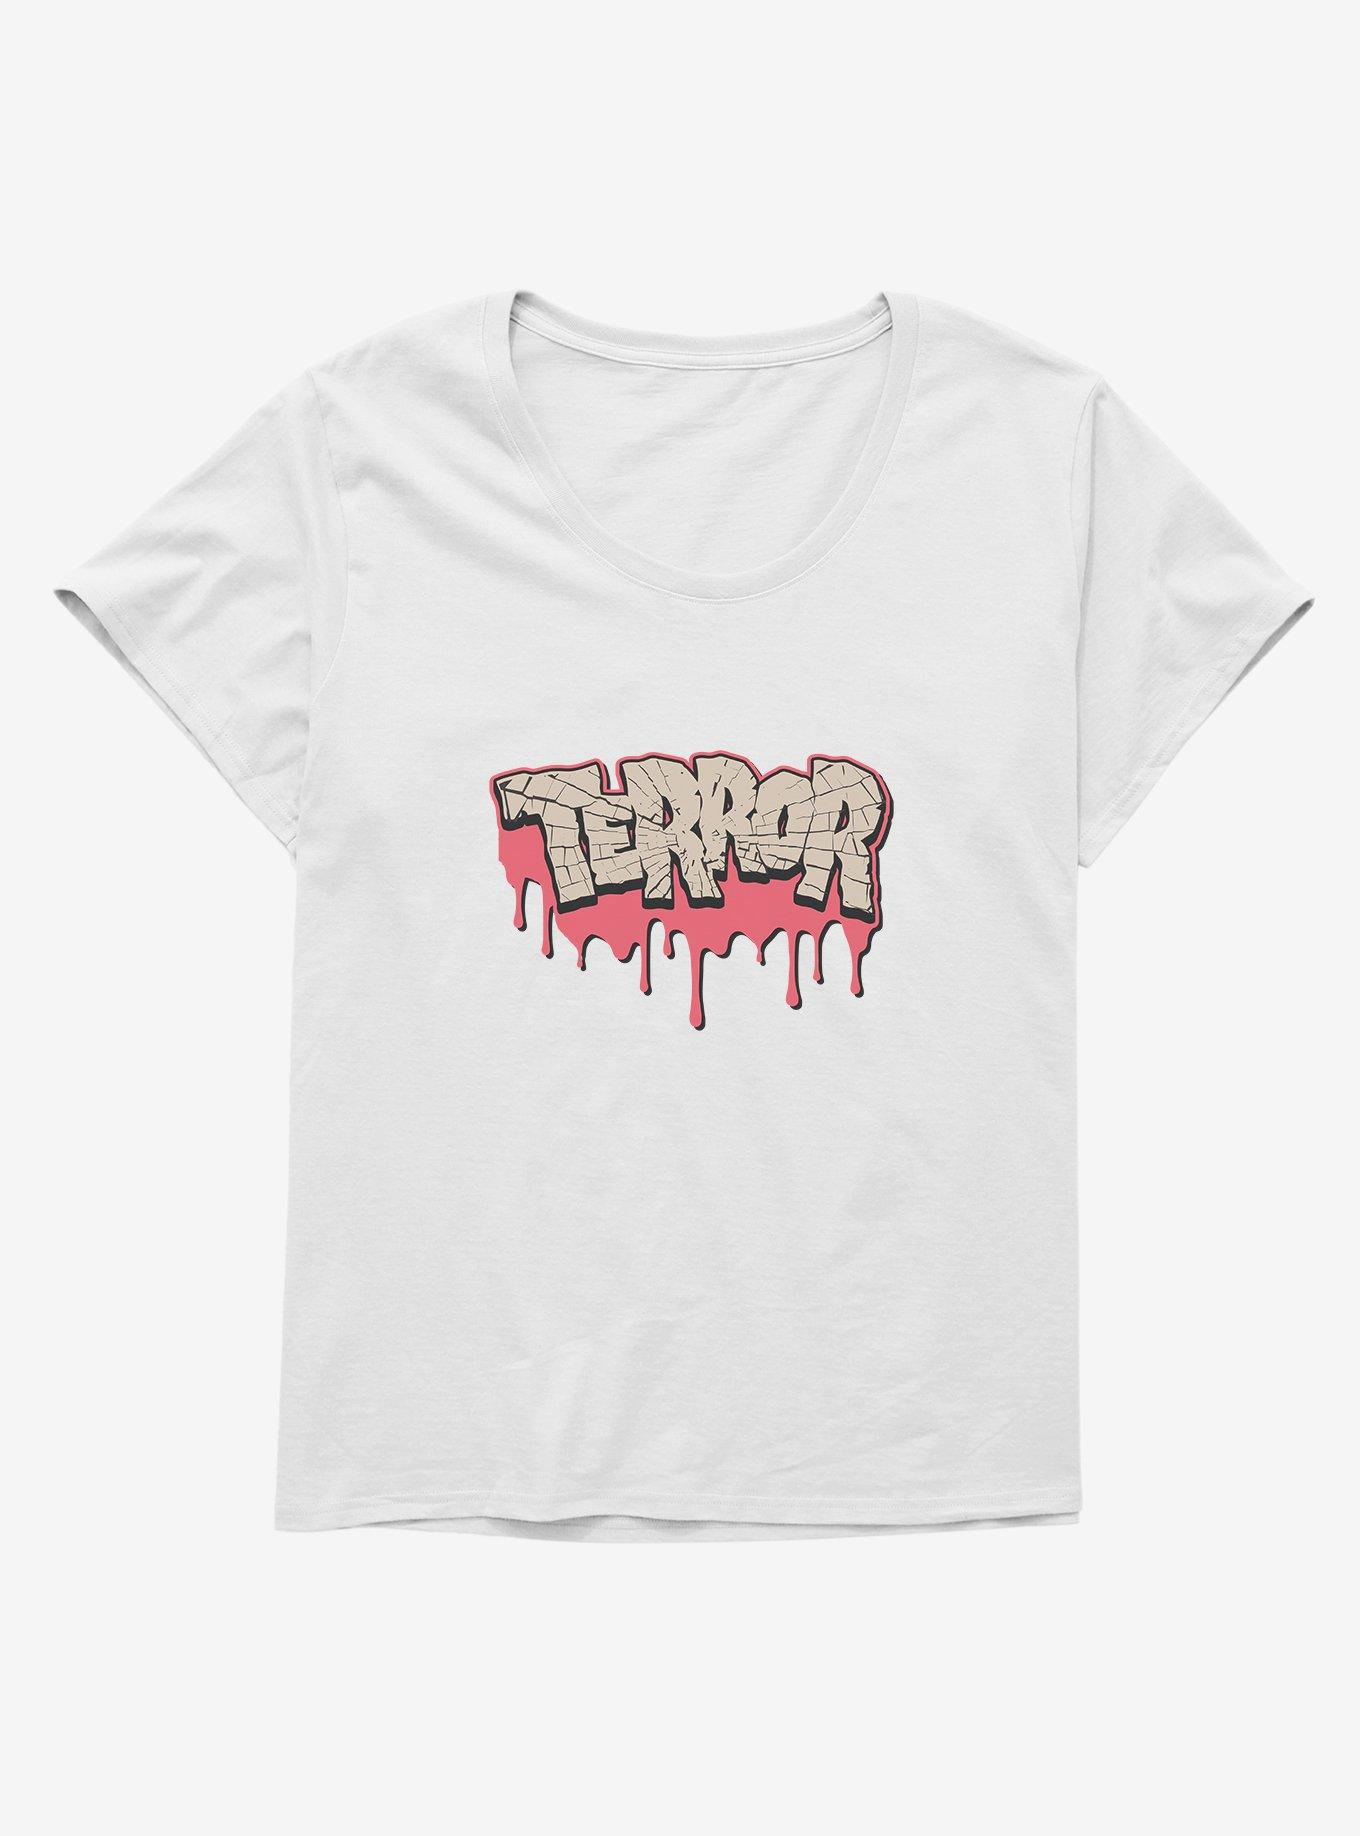 Halloween Terror Drip Girls Plus Size T-Shirt, WHITE, hi-res